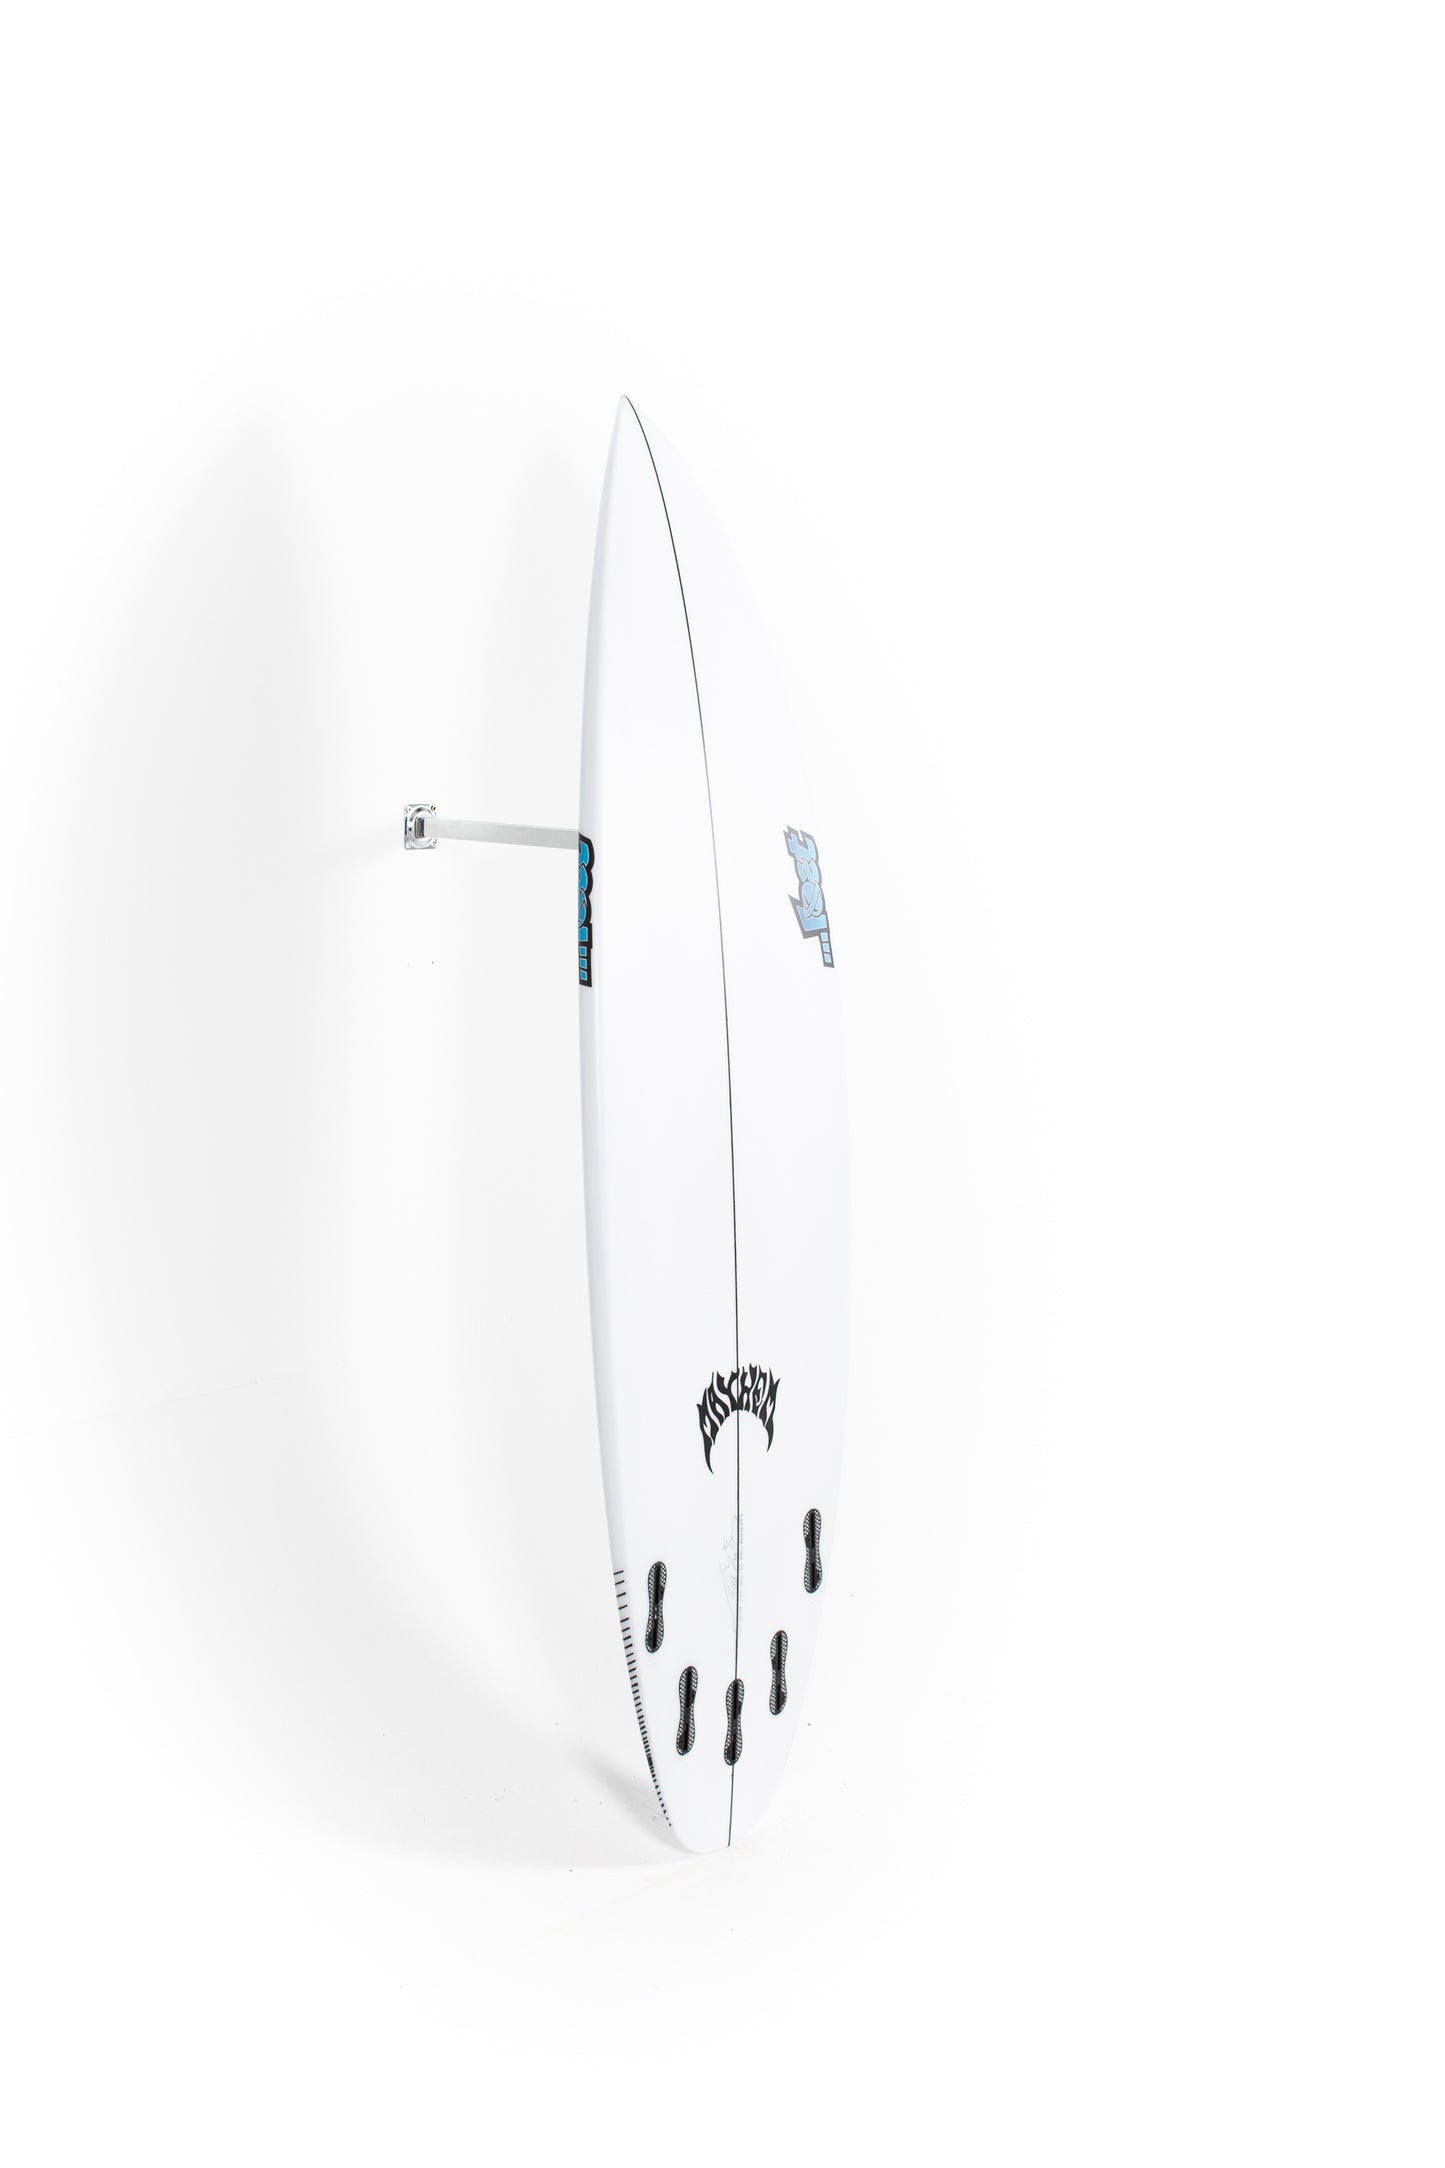 
                  
                    Pukas Surf Shop - Lost Surfboard - PUDDLE JUMPER-PRO by Matt Biolos - 5'11" x 20,25 x 2.55 x 33L - MH16657
                  
                